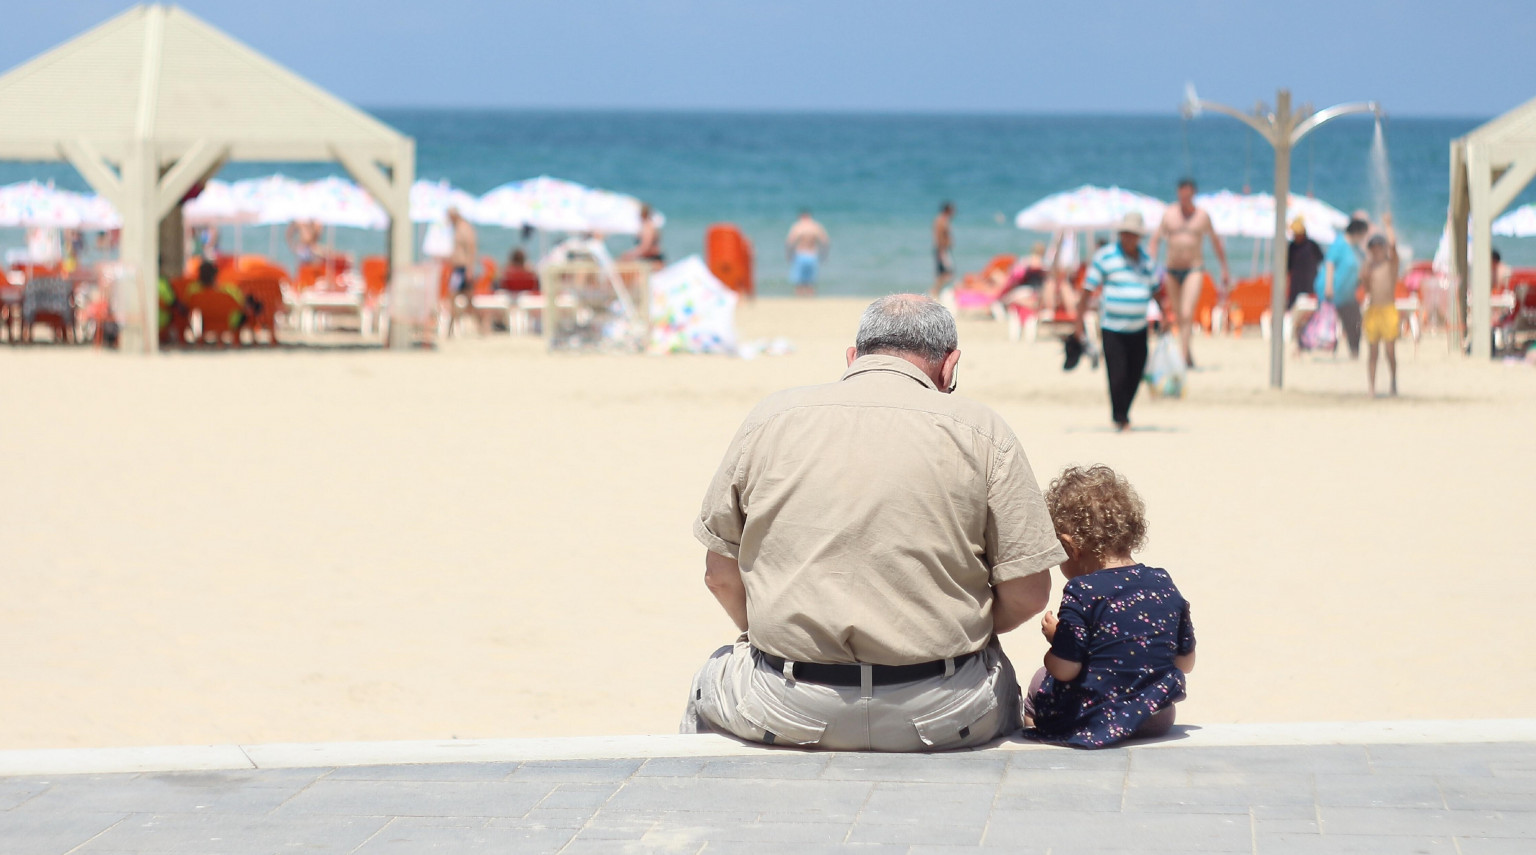 Anziani in vacanza: i nostri consigli per una vacanza sicura